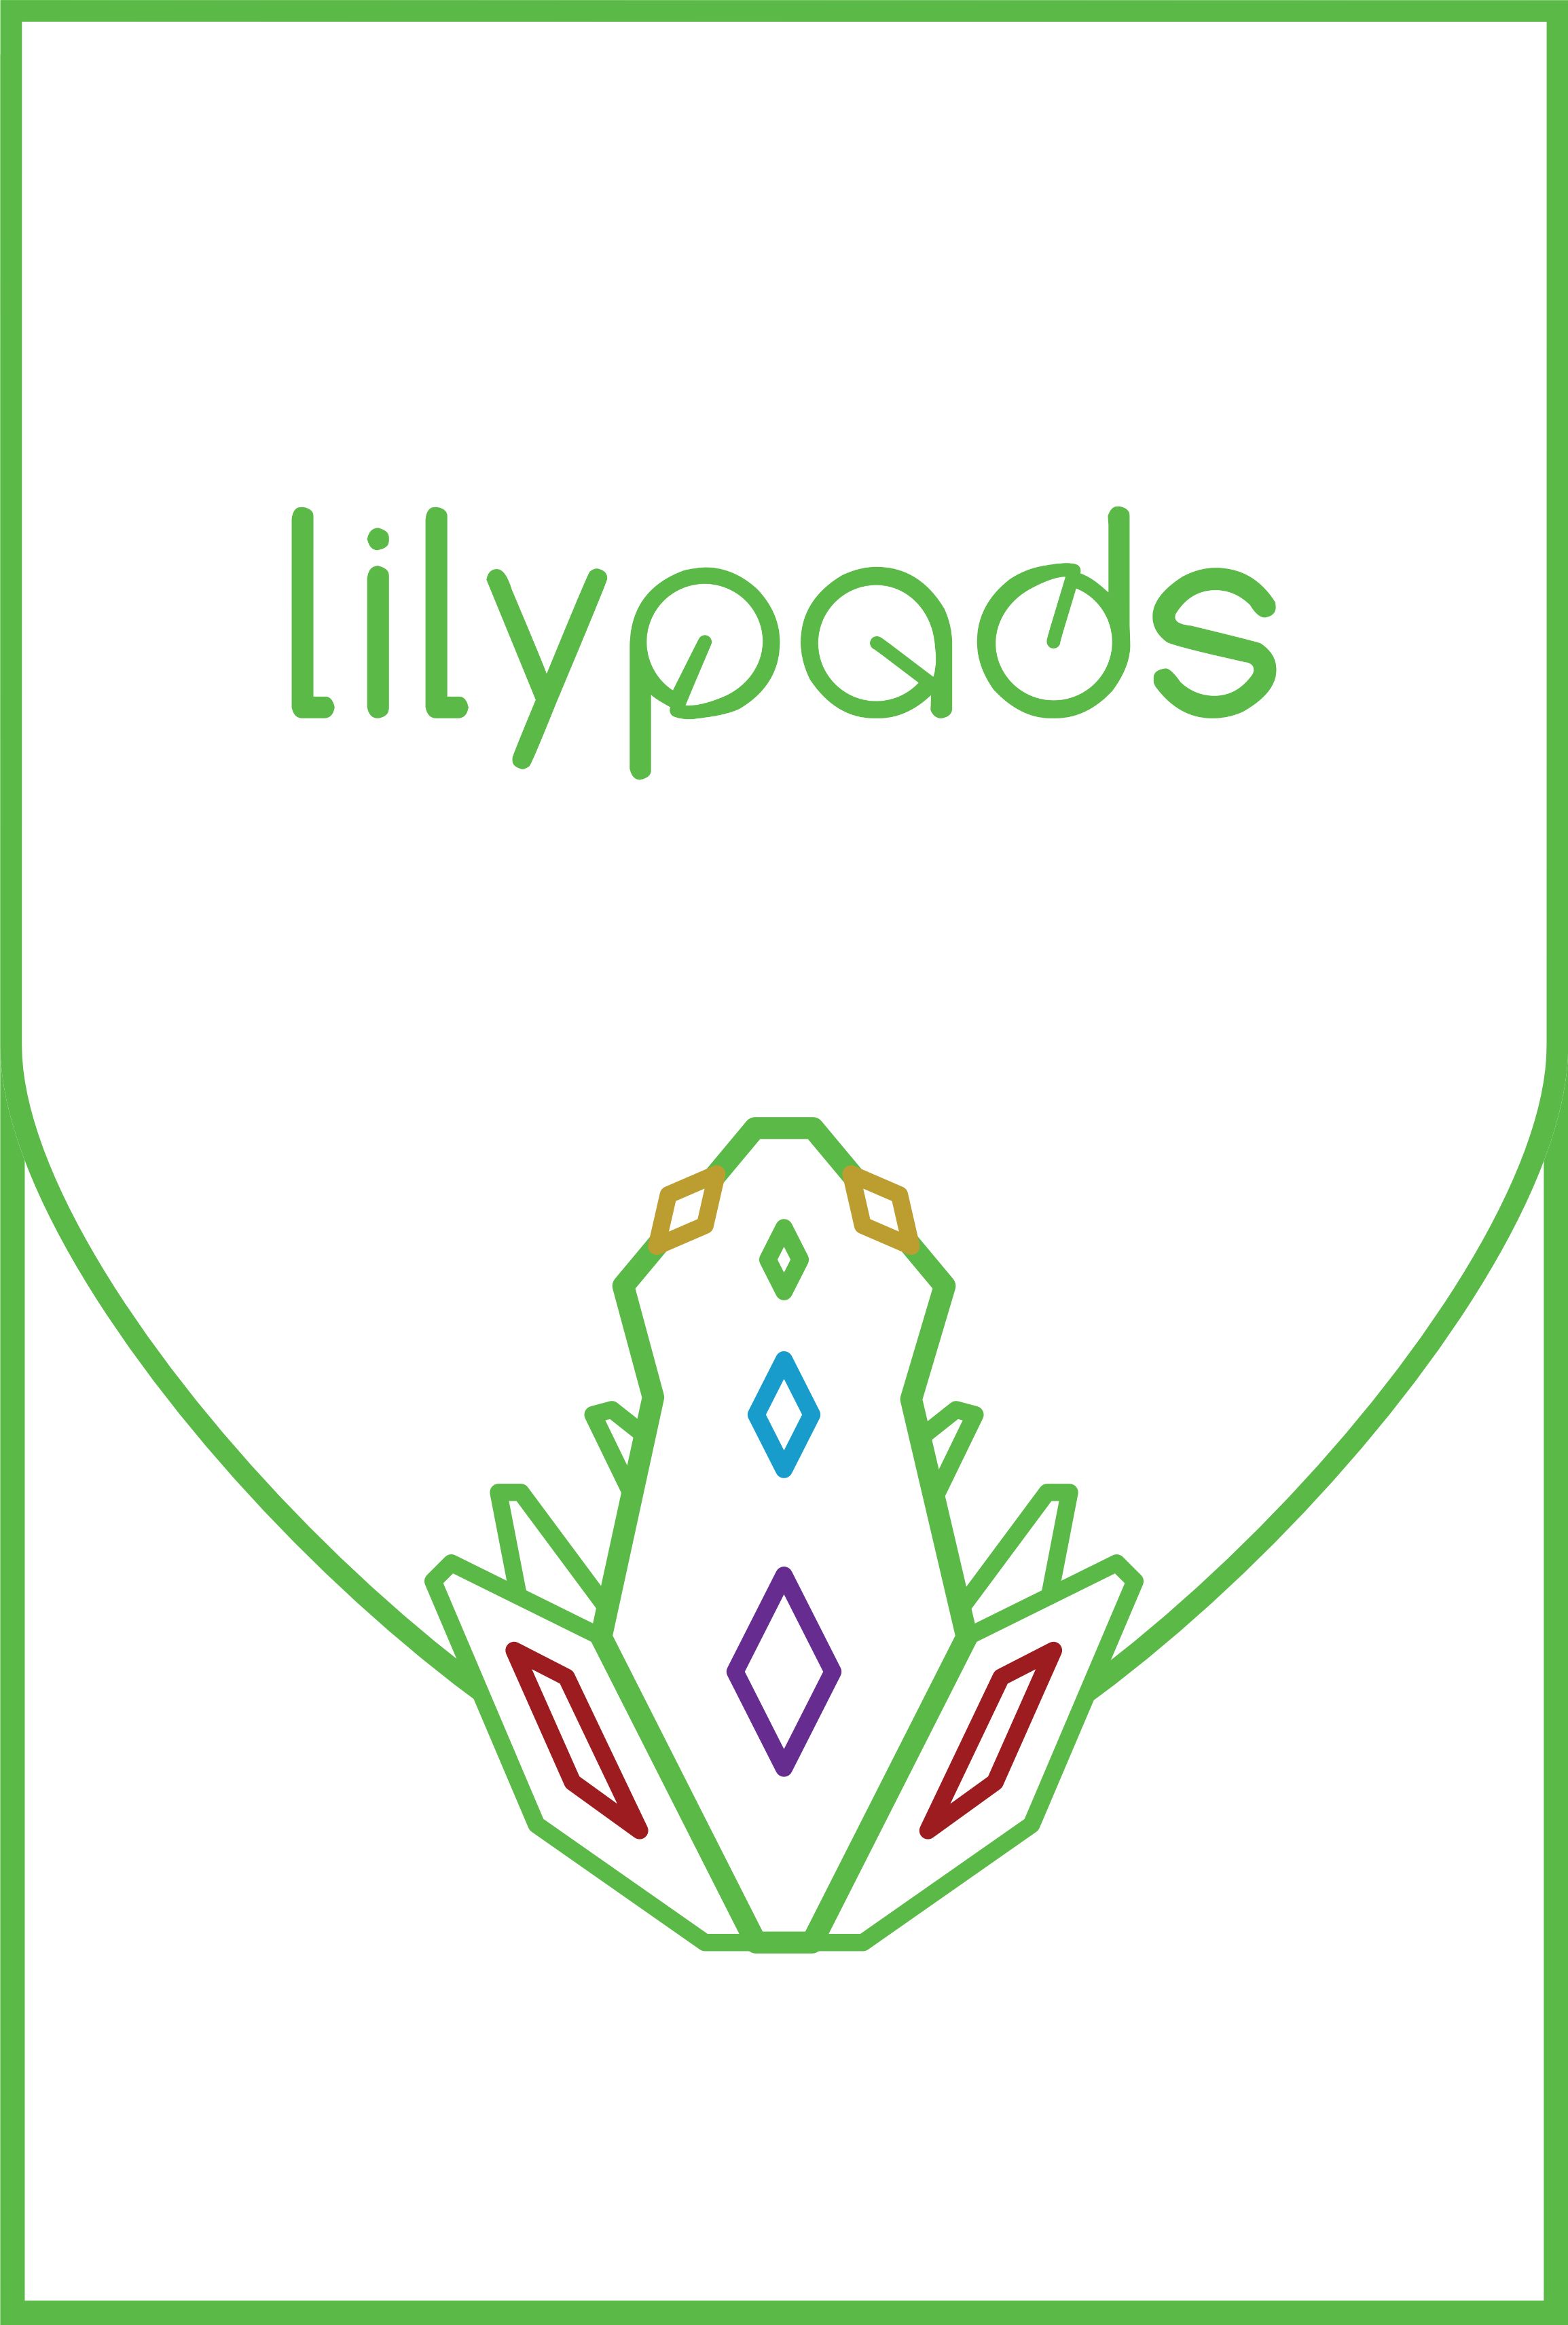 Lilypads